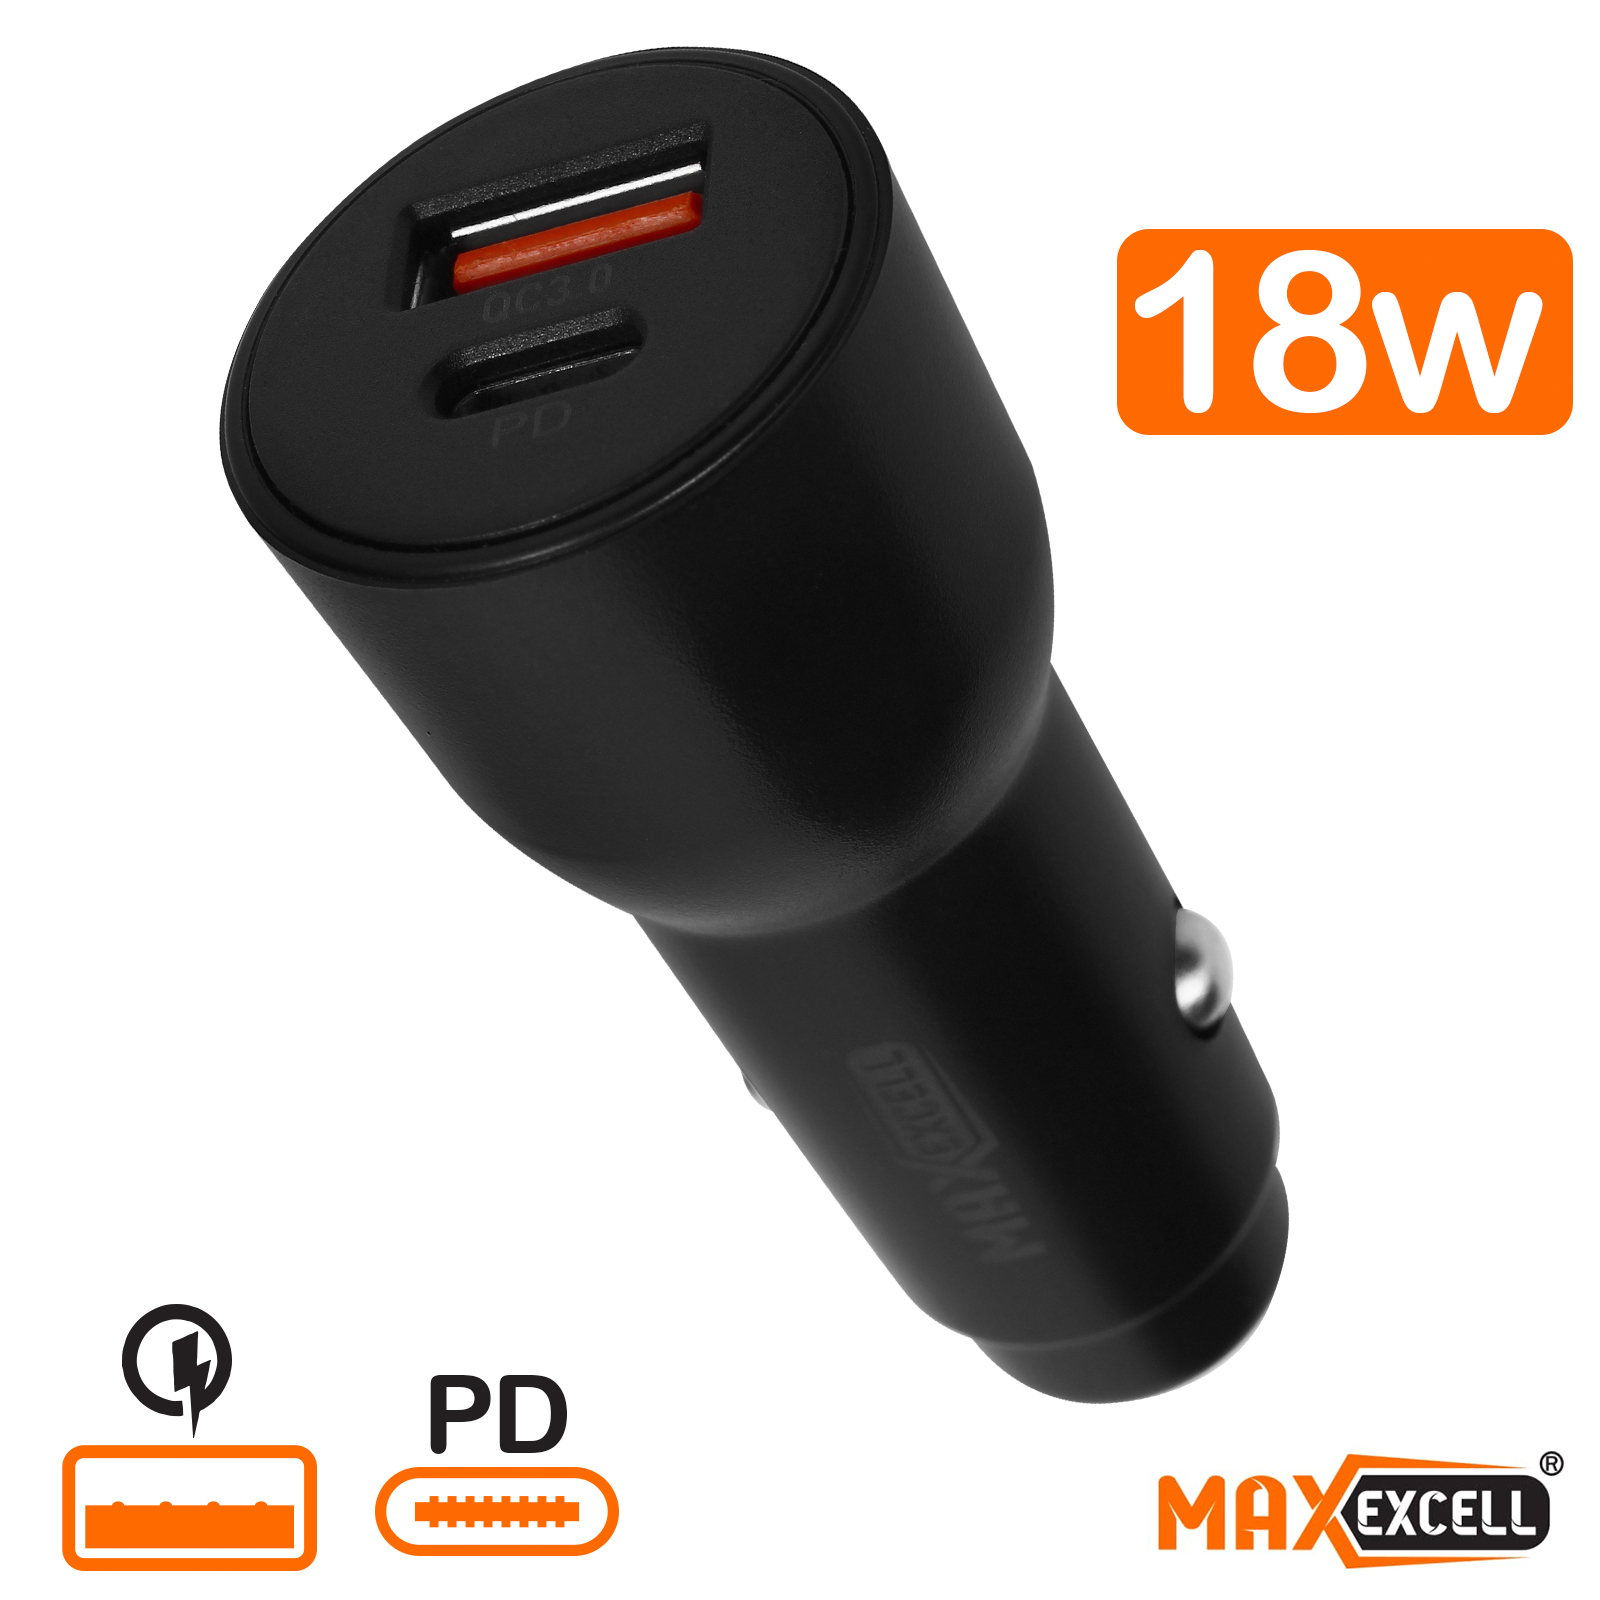 Chargeur Voiture USB Quick Charge + USB-C Power Delivery 18W Max excell -  Noir - Français